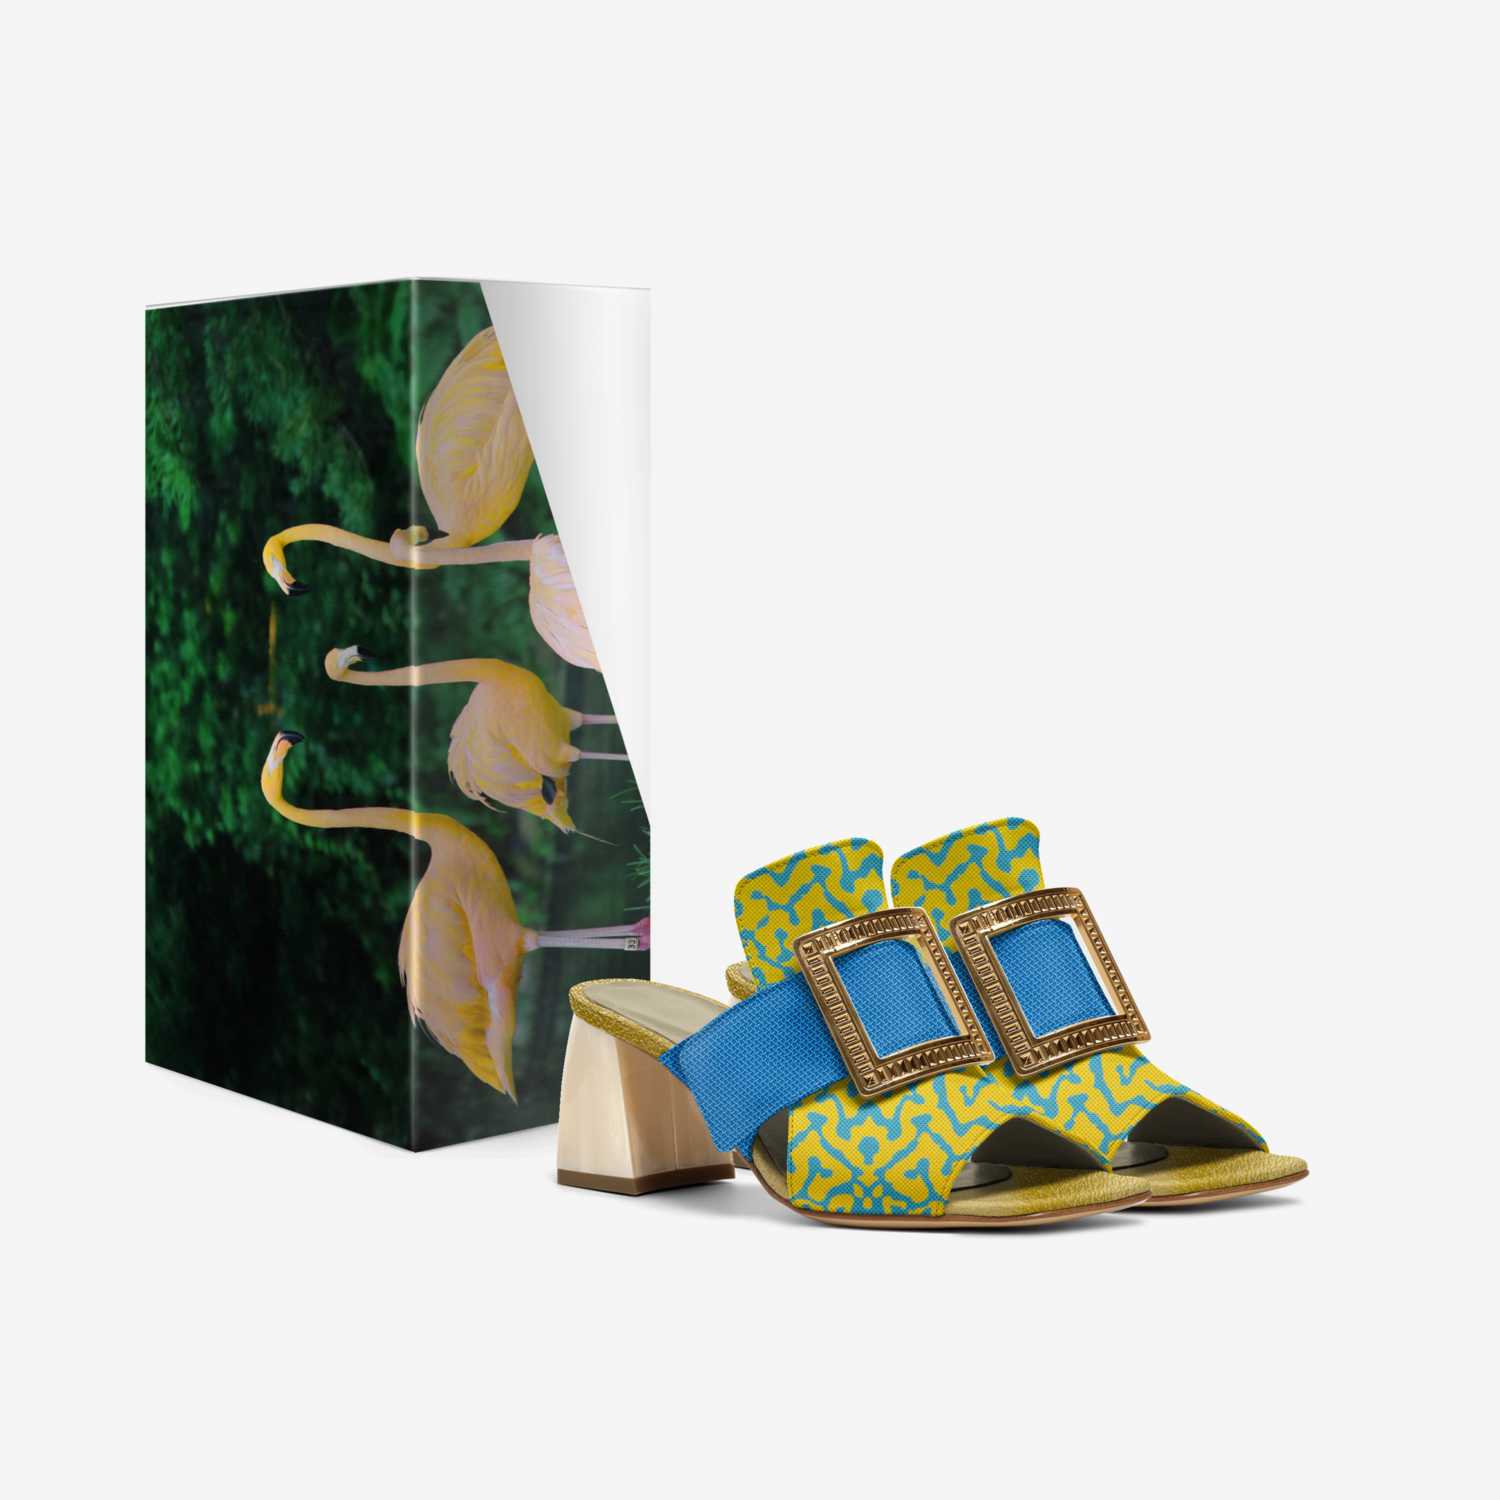 Taos custom made in Italy shoes by Calvina Morris | Box view